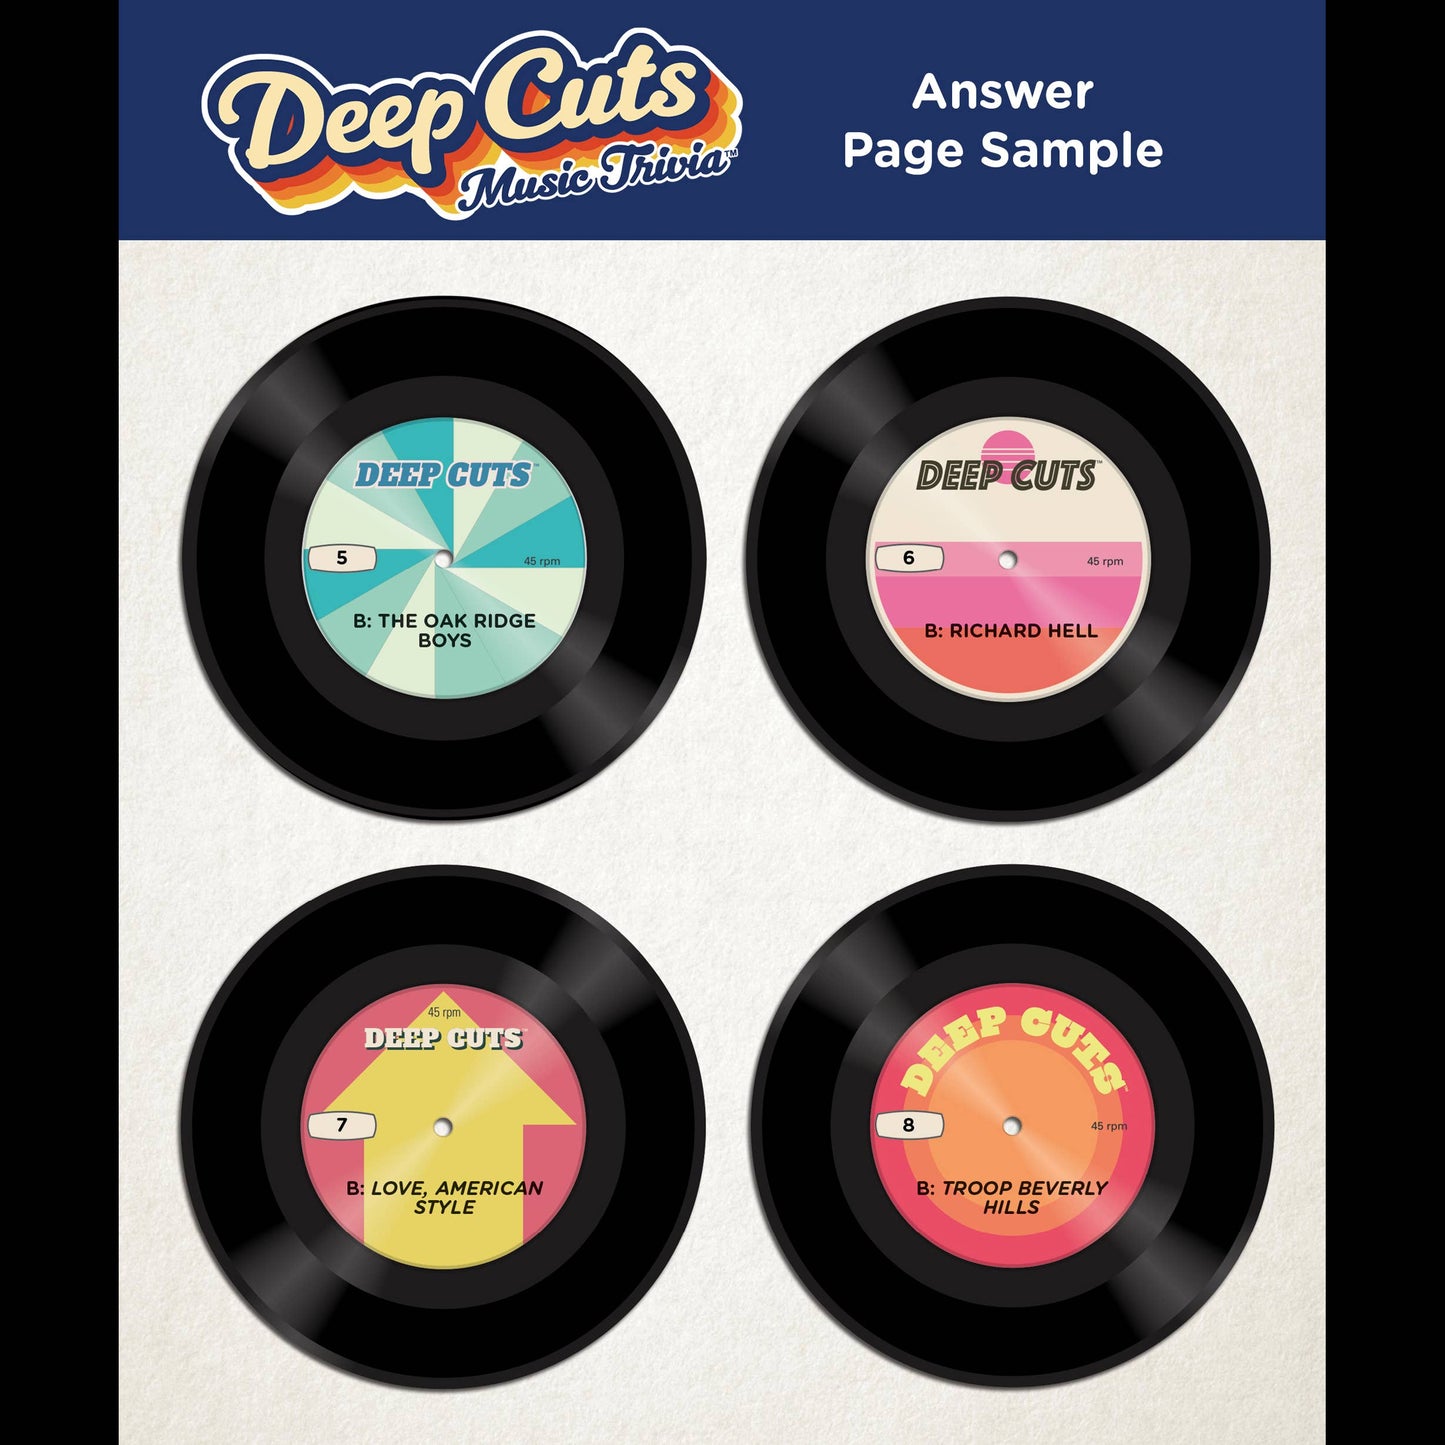 Deep Cuts Book of Music Trivia